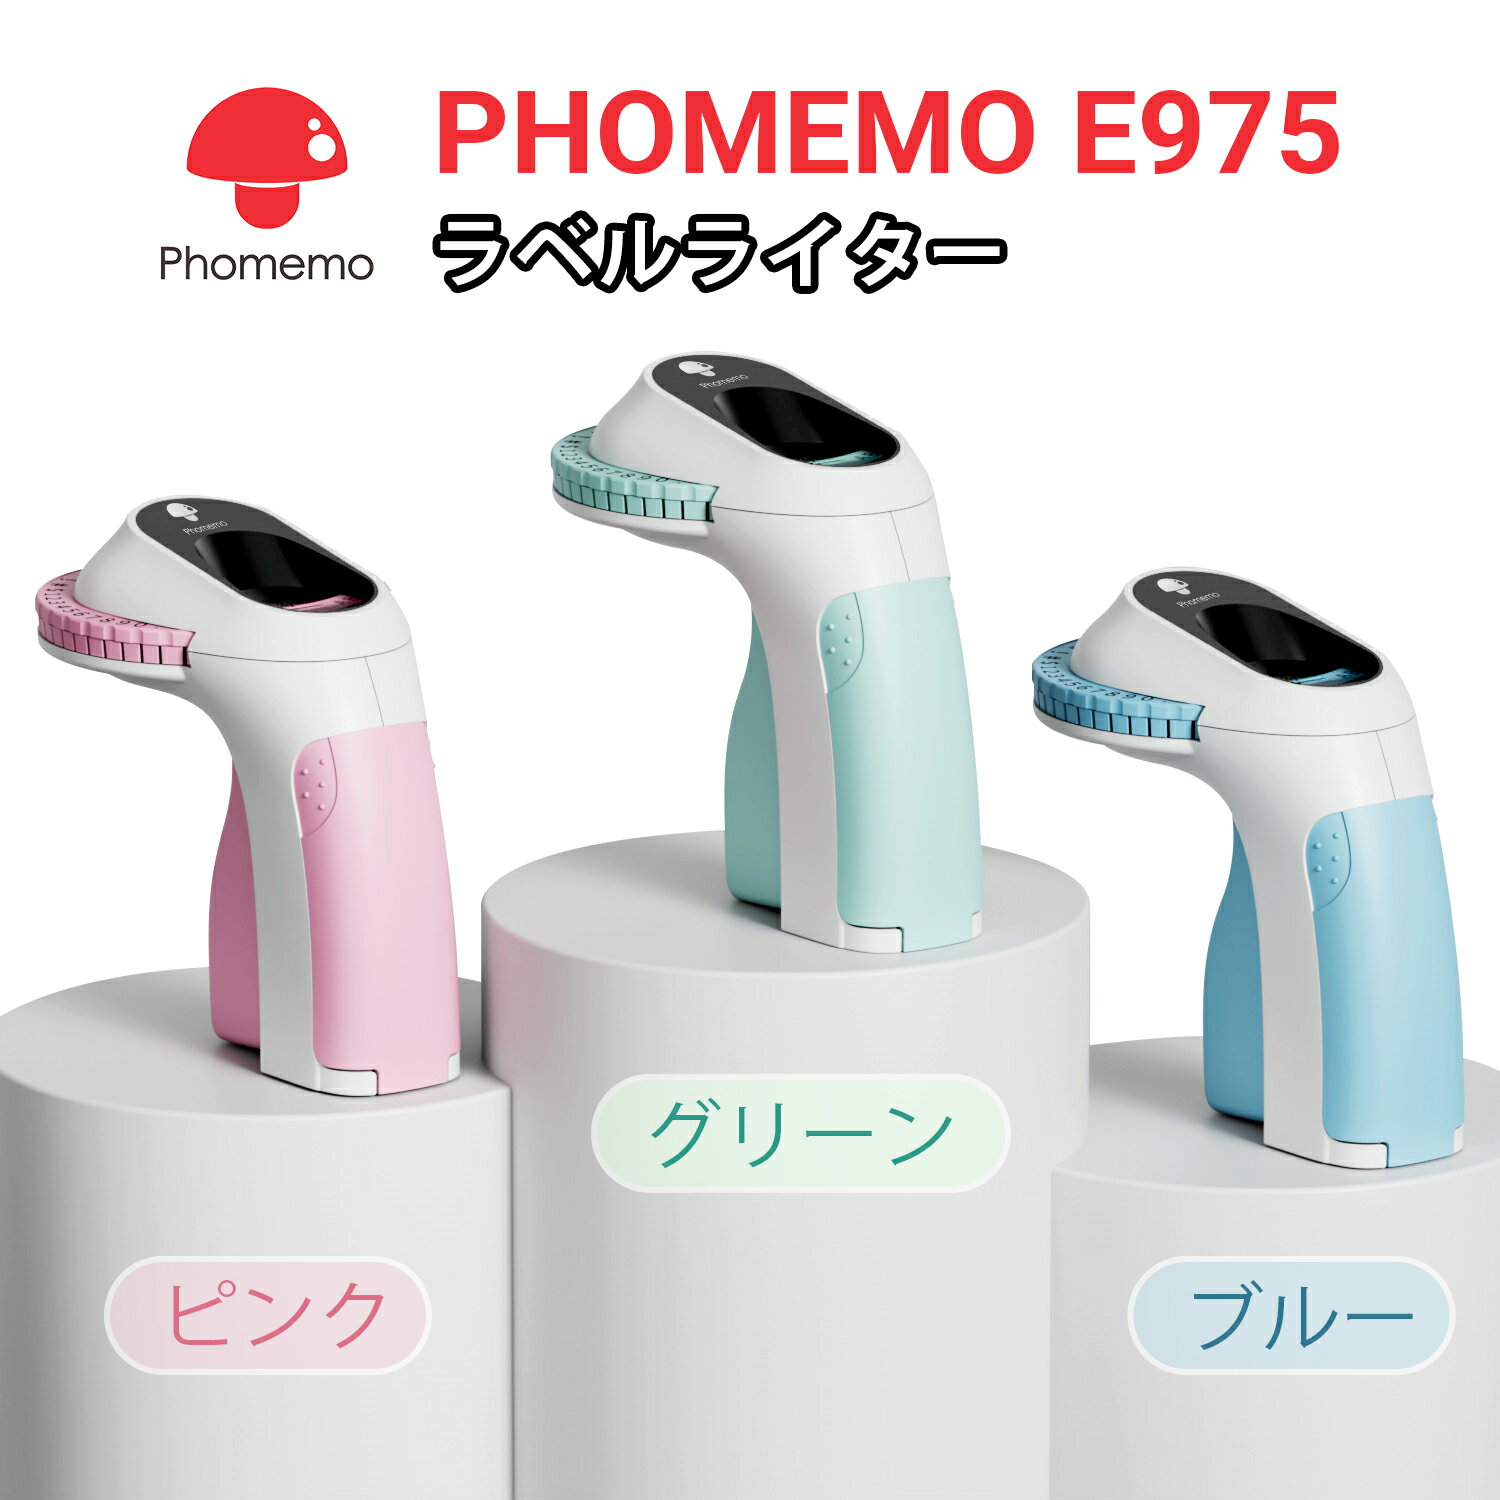 Phomemo E975 エンボス テープライター 9mm幅テープ対応 英数字 互換 ダイモテープ 6巻付き 9mm幅テープ対応 英数字 エンボス加工ラベルメーカー エンボサー 3D印刷 レトロ クラフトホーム用 …